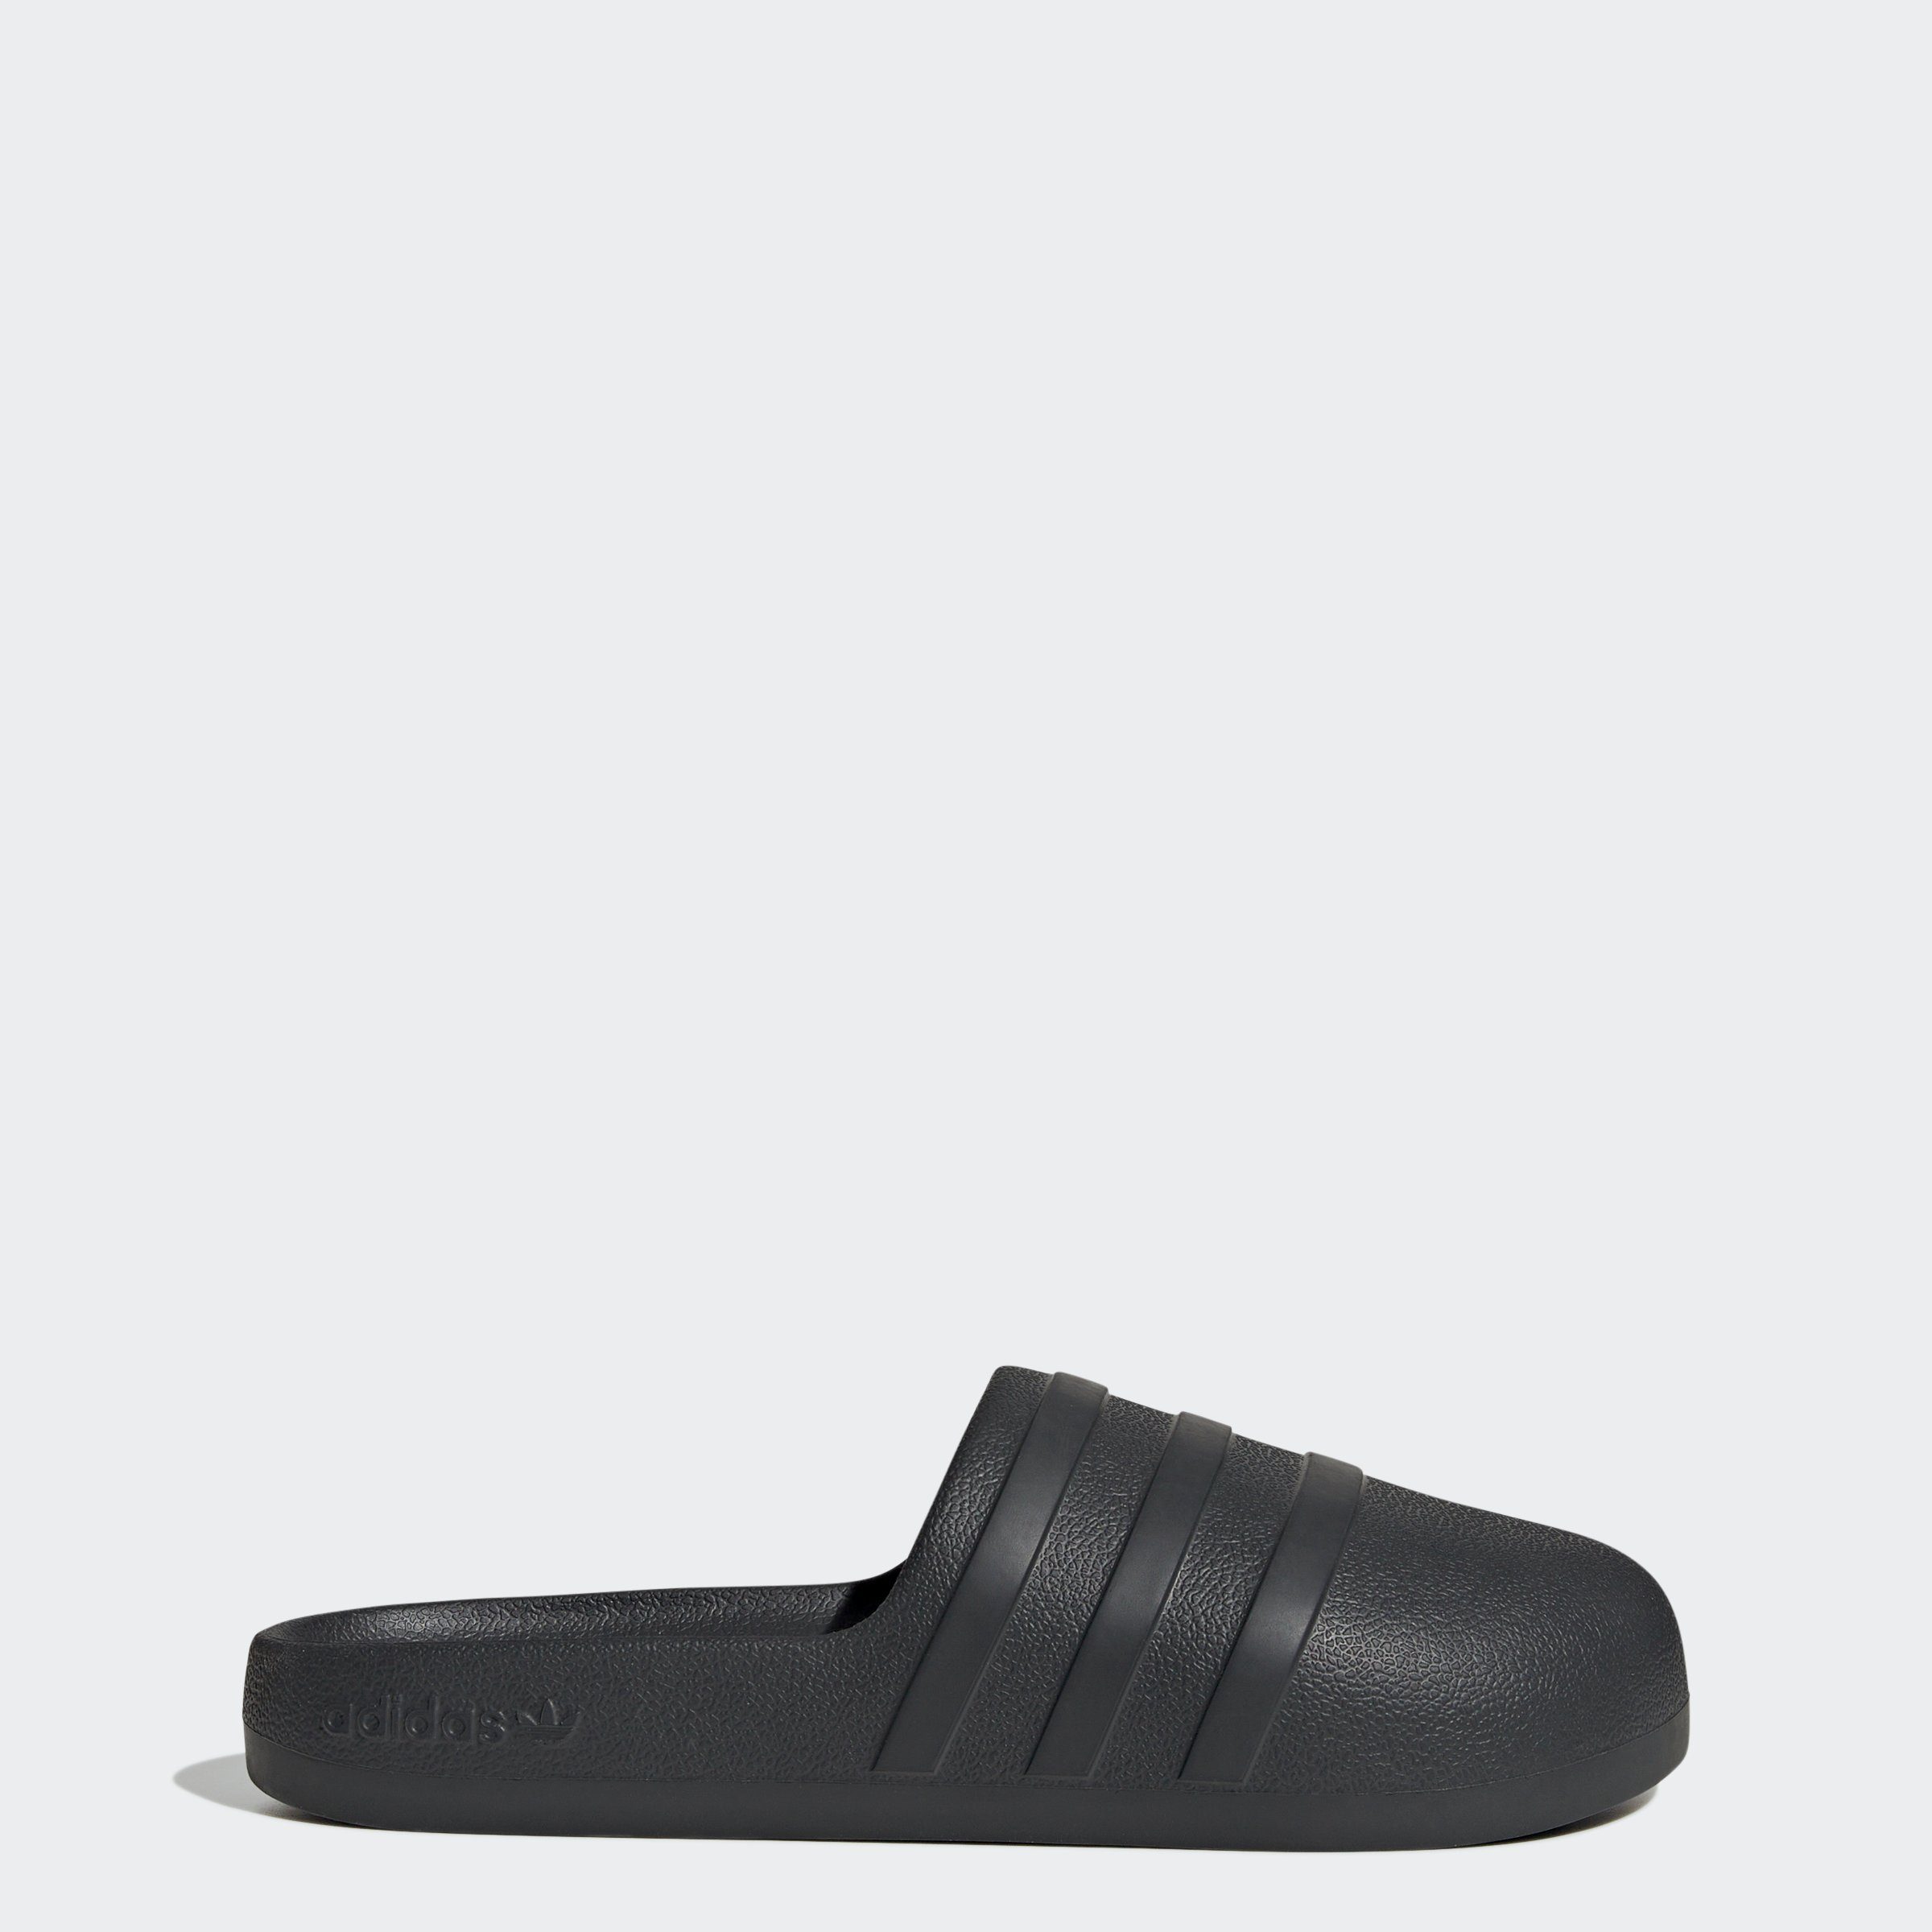 adidas Originals / / Carbon Black Carbon ADILETTE Core Badesandale